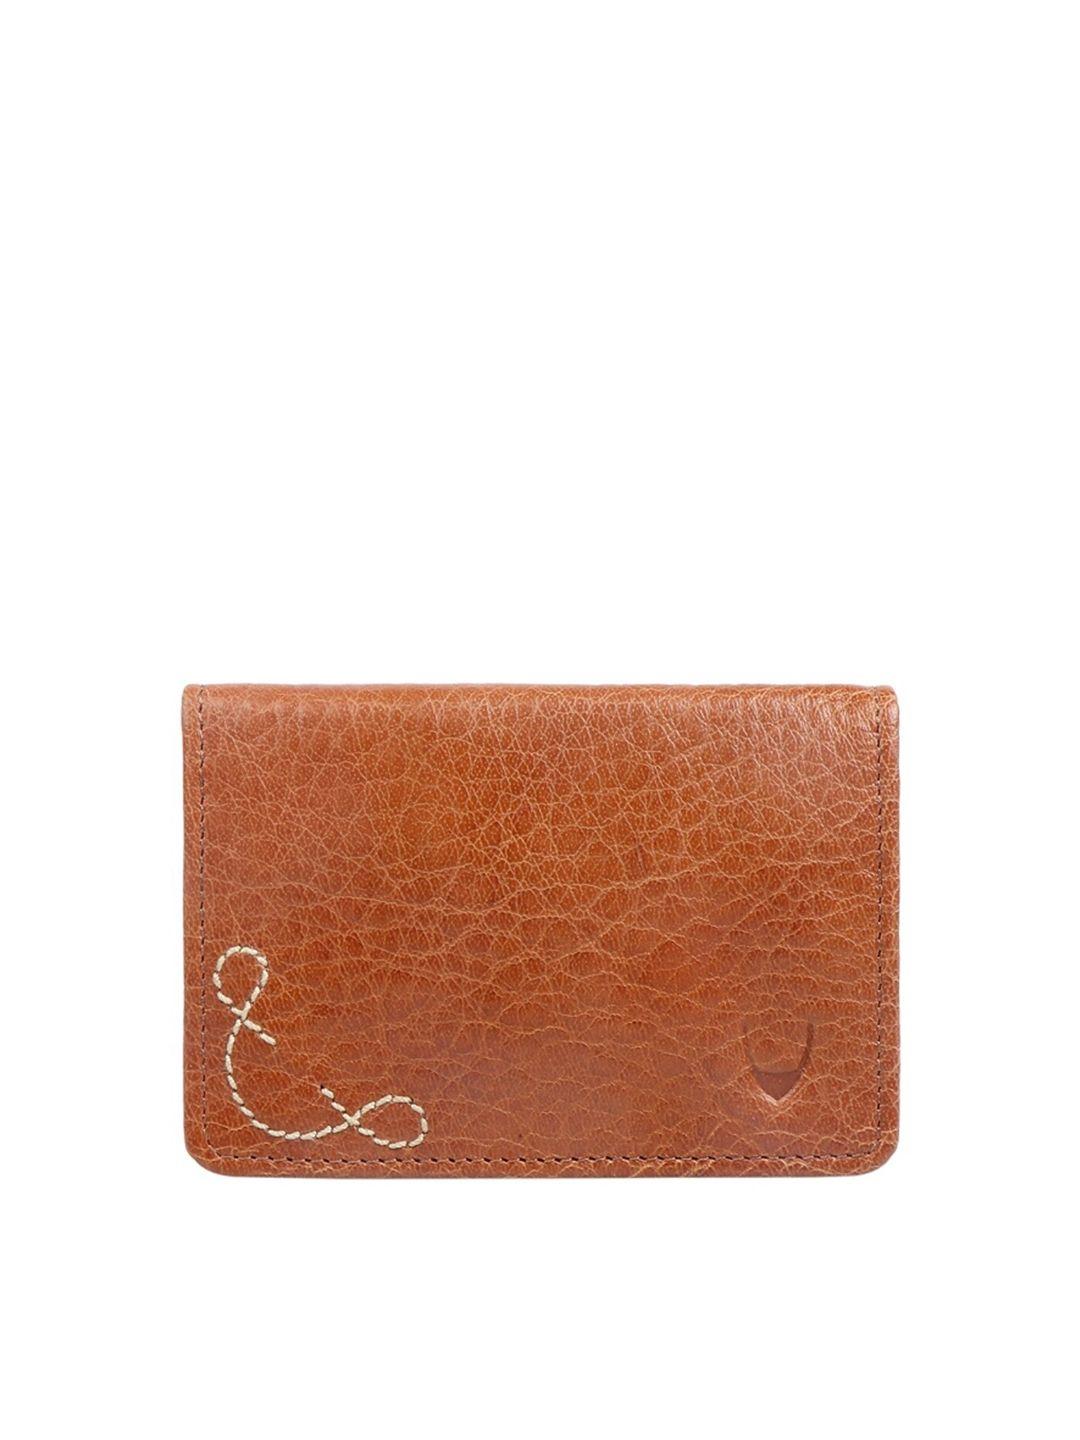 hidesign men tan brown textured leather card holder